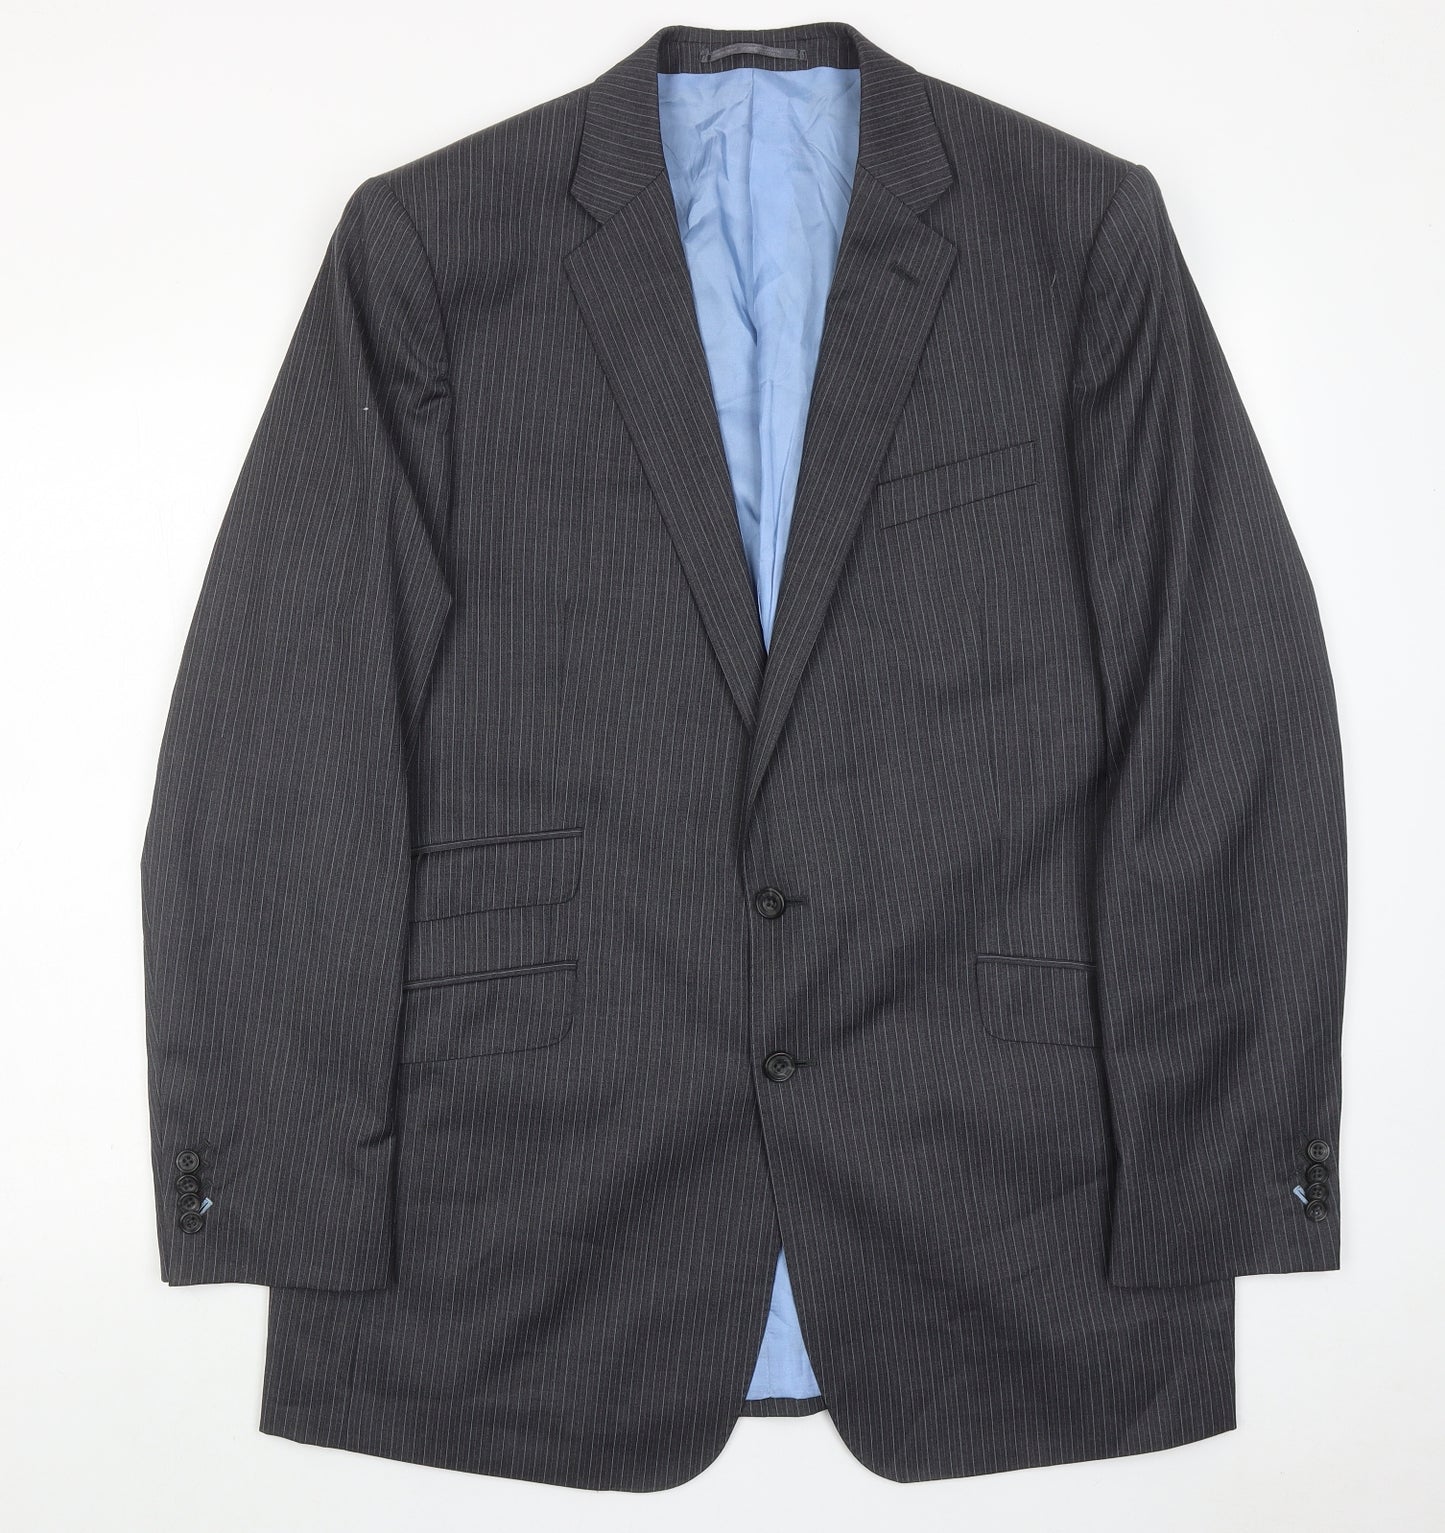 Norton townsend Mens Grey Striped Polyester Jacket Suit Jacket Size 46 Regular